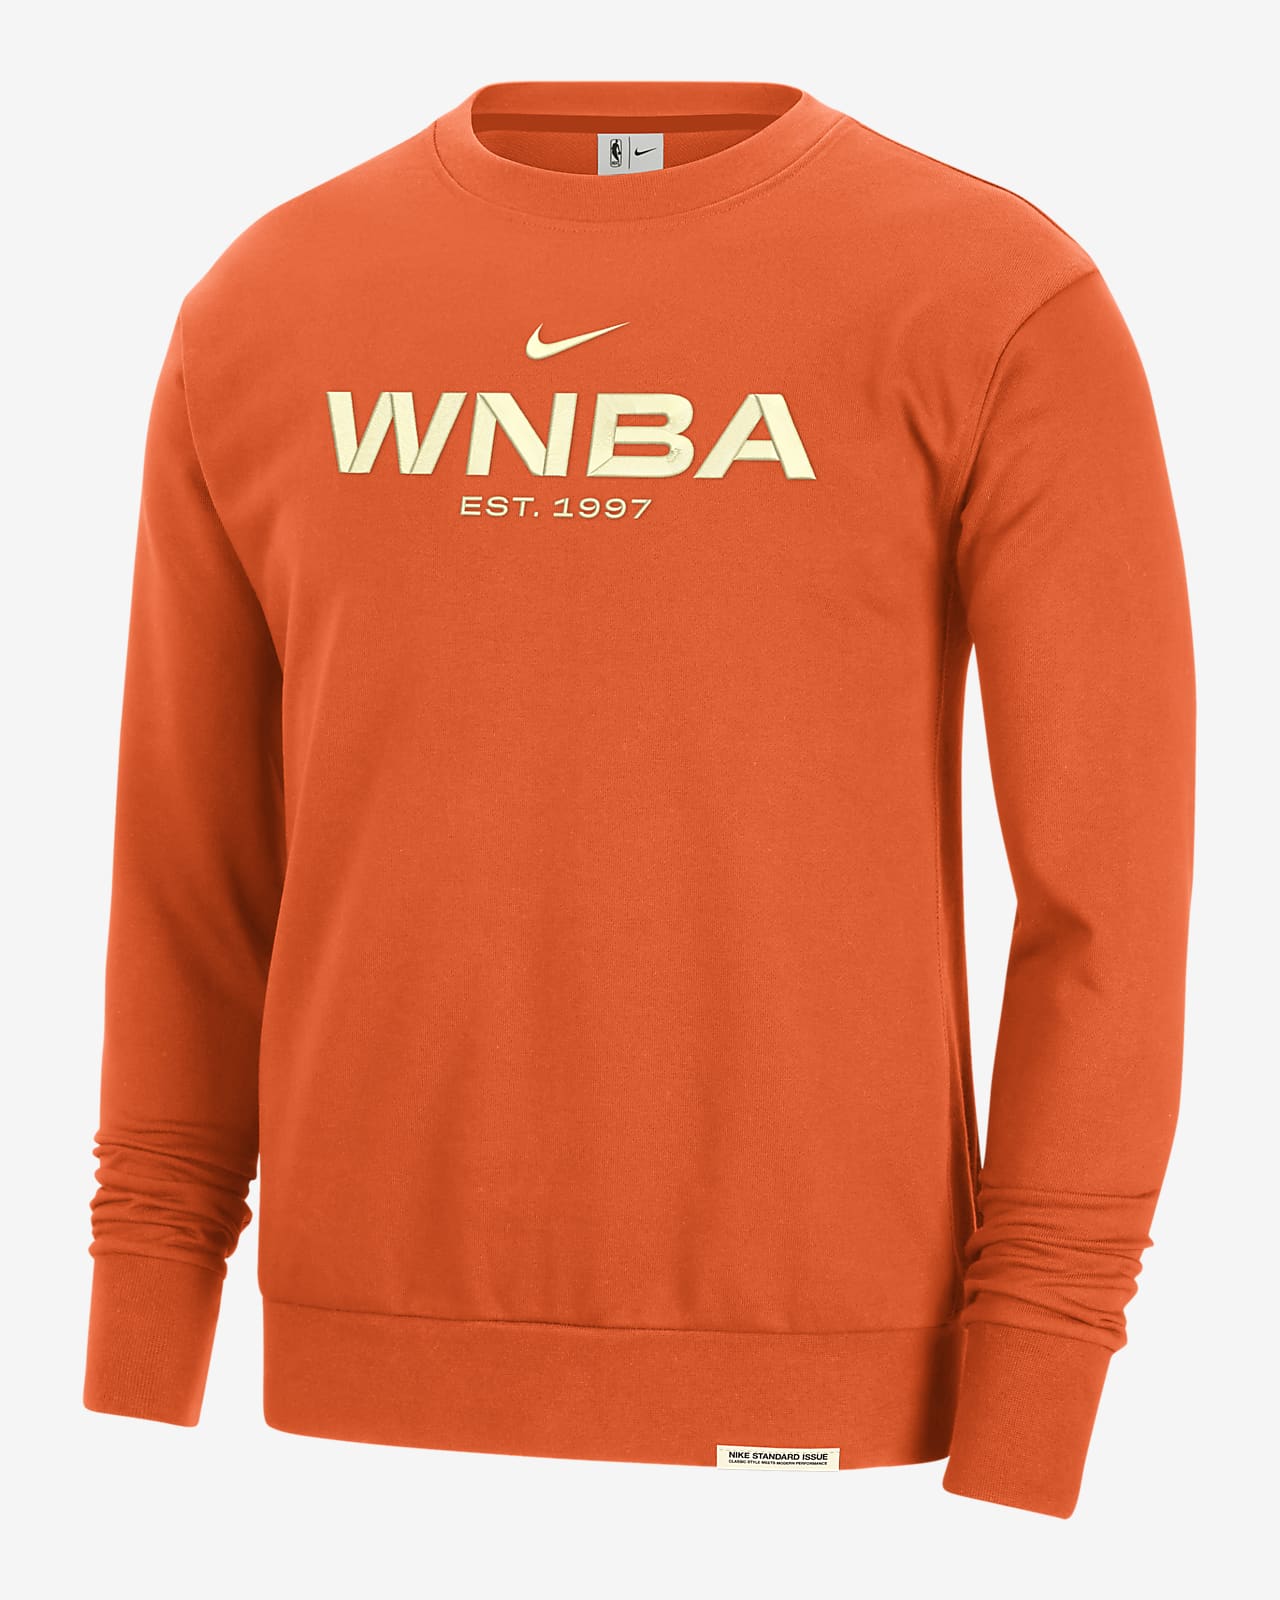 WNBA Standard Issue Nike Dri-FIT Basketball Crew-Neck Sweatshirt